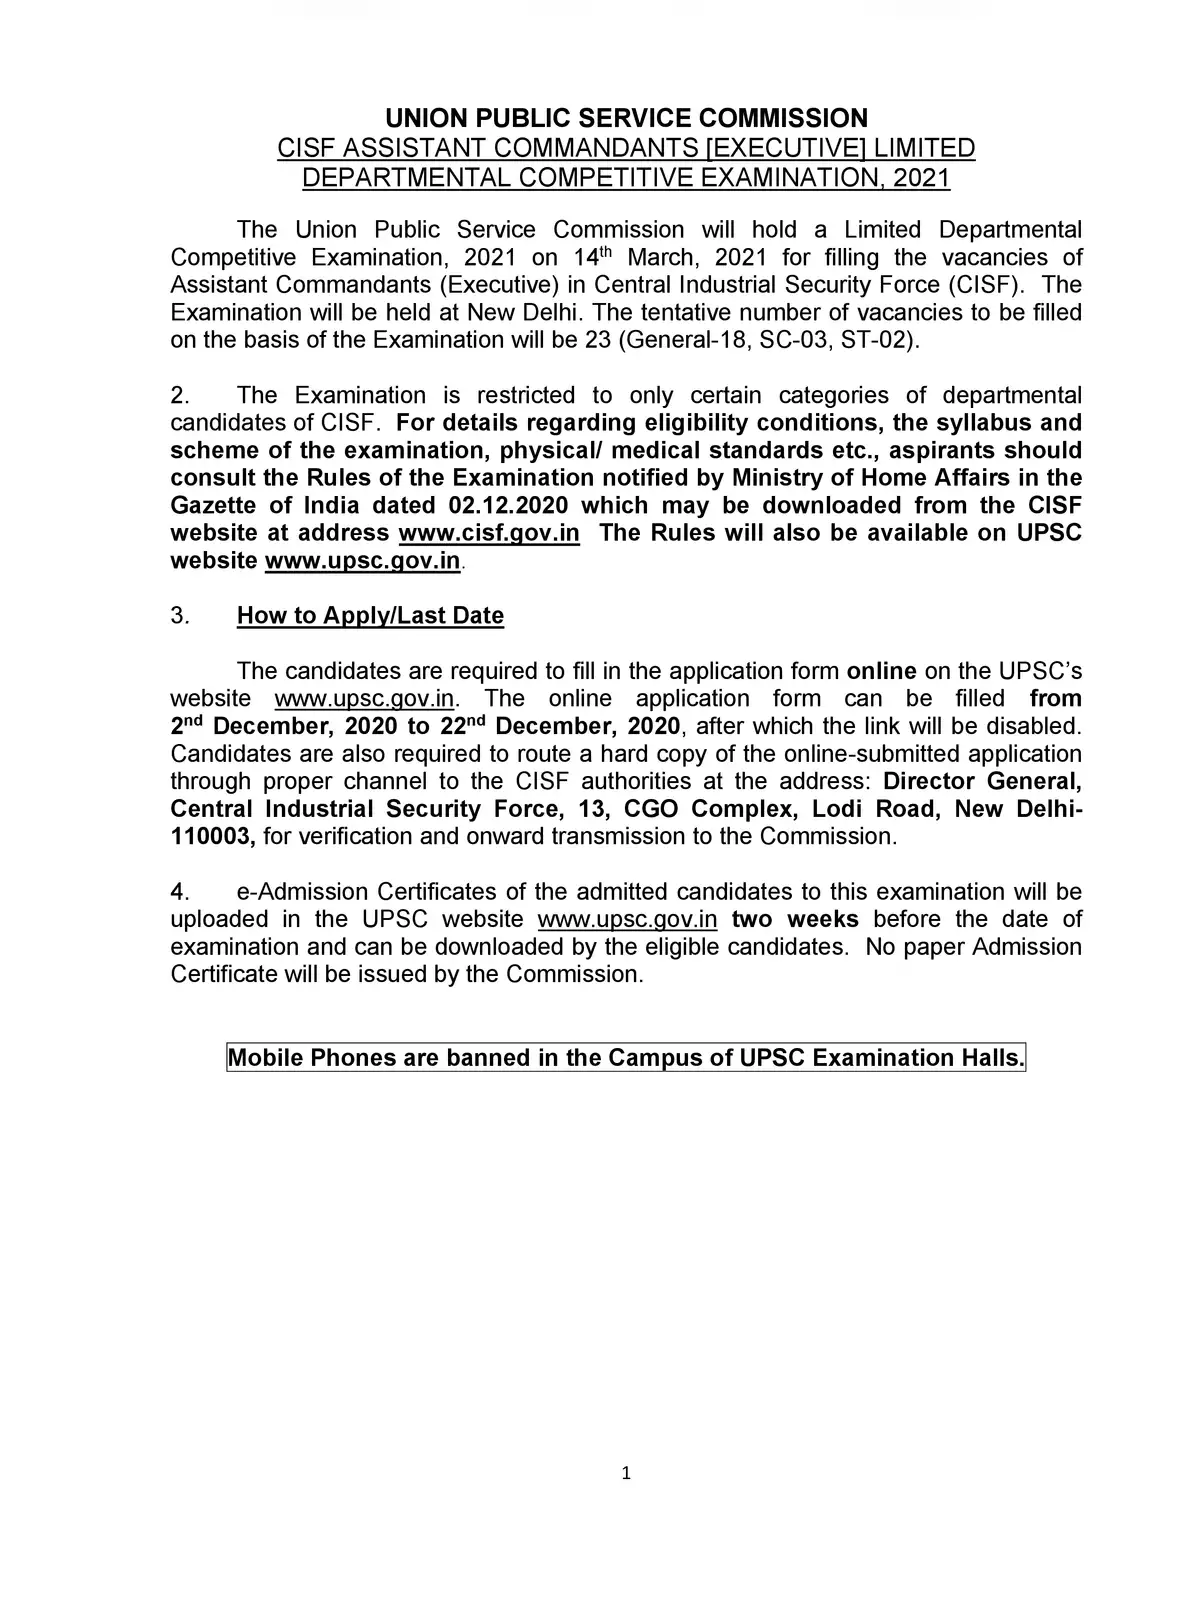 UPSC CISF Recruitment Notification 2021